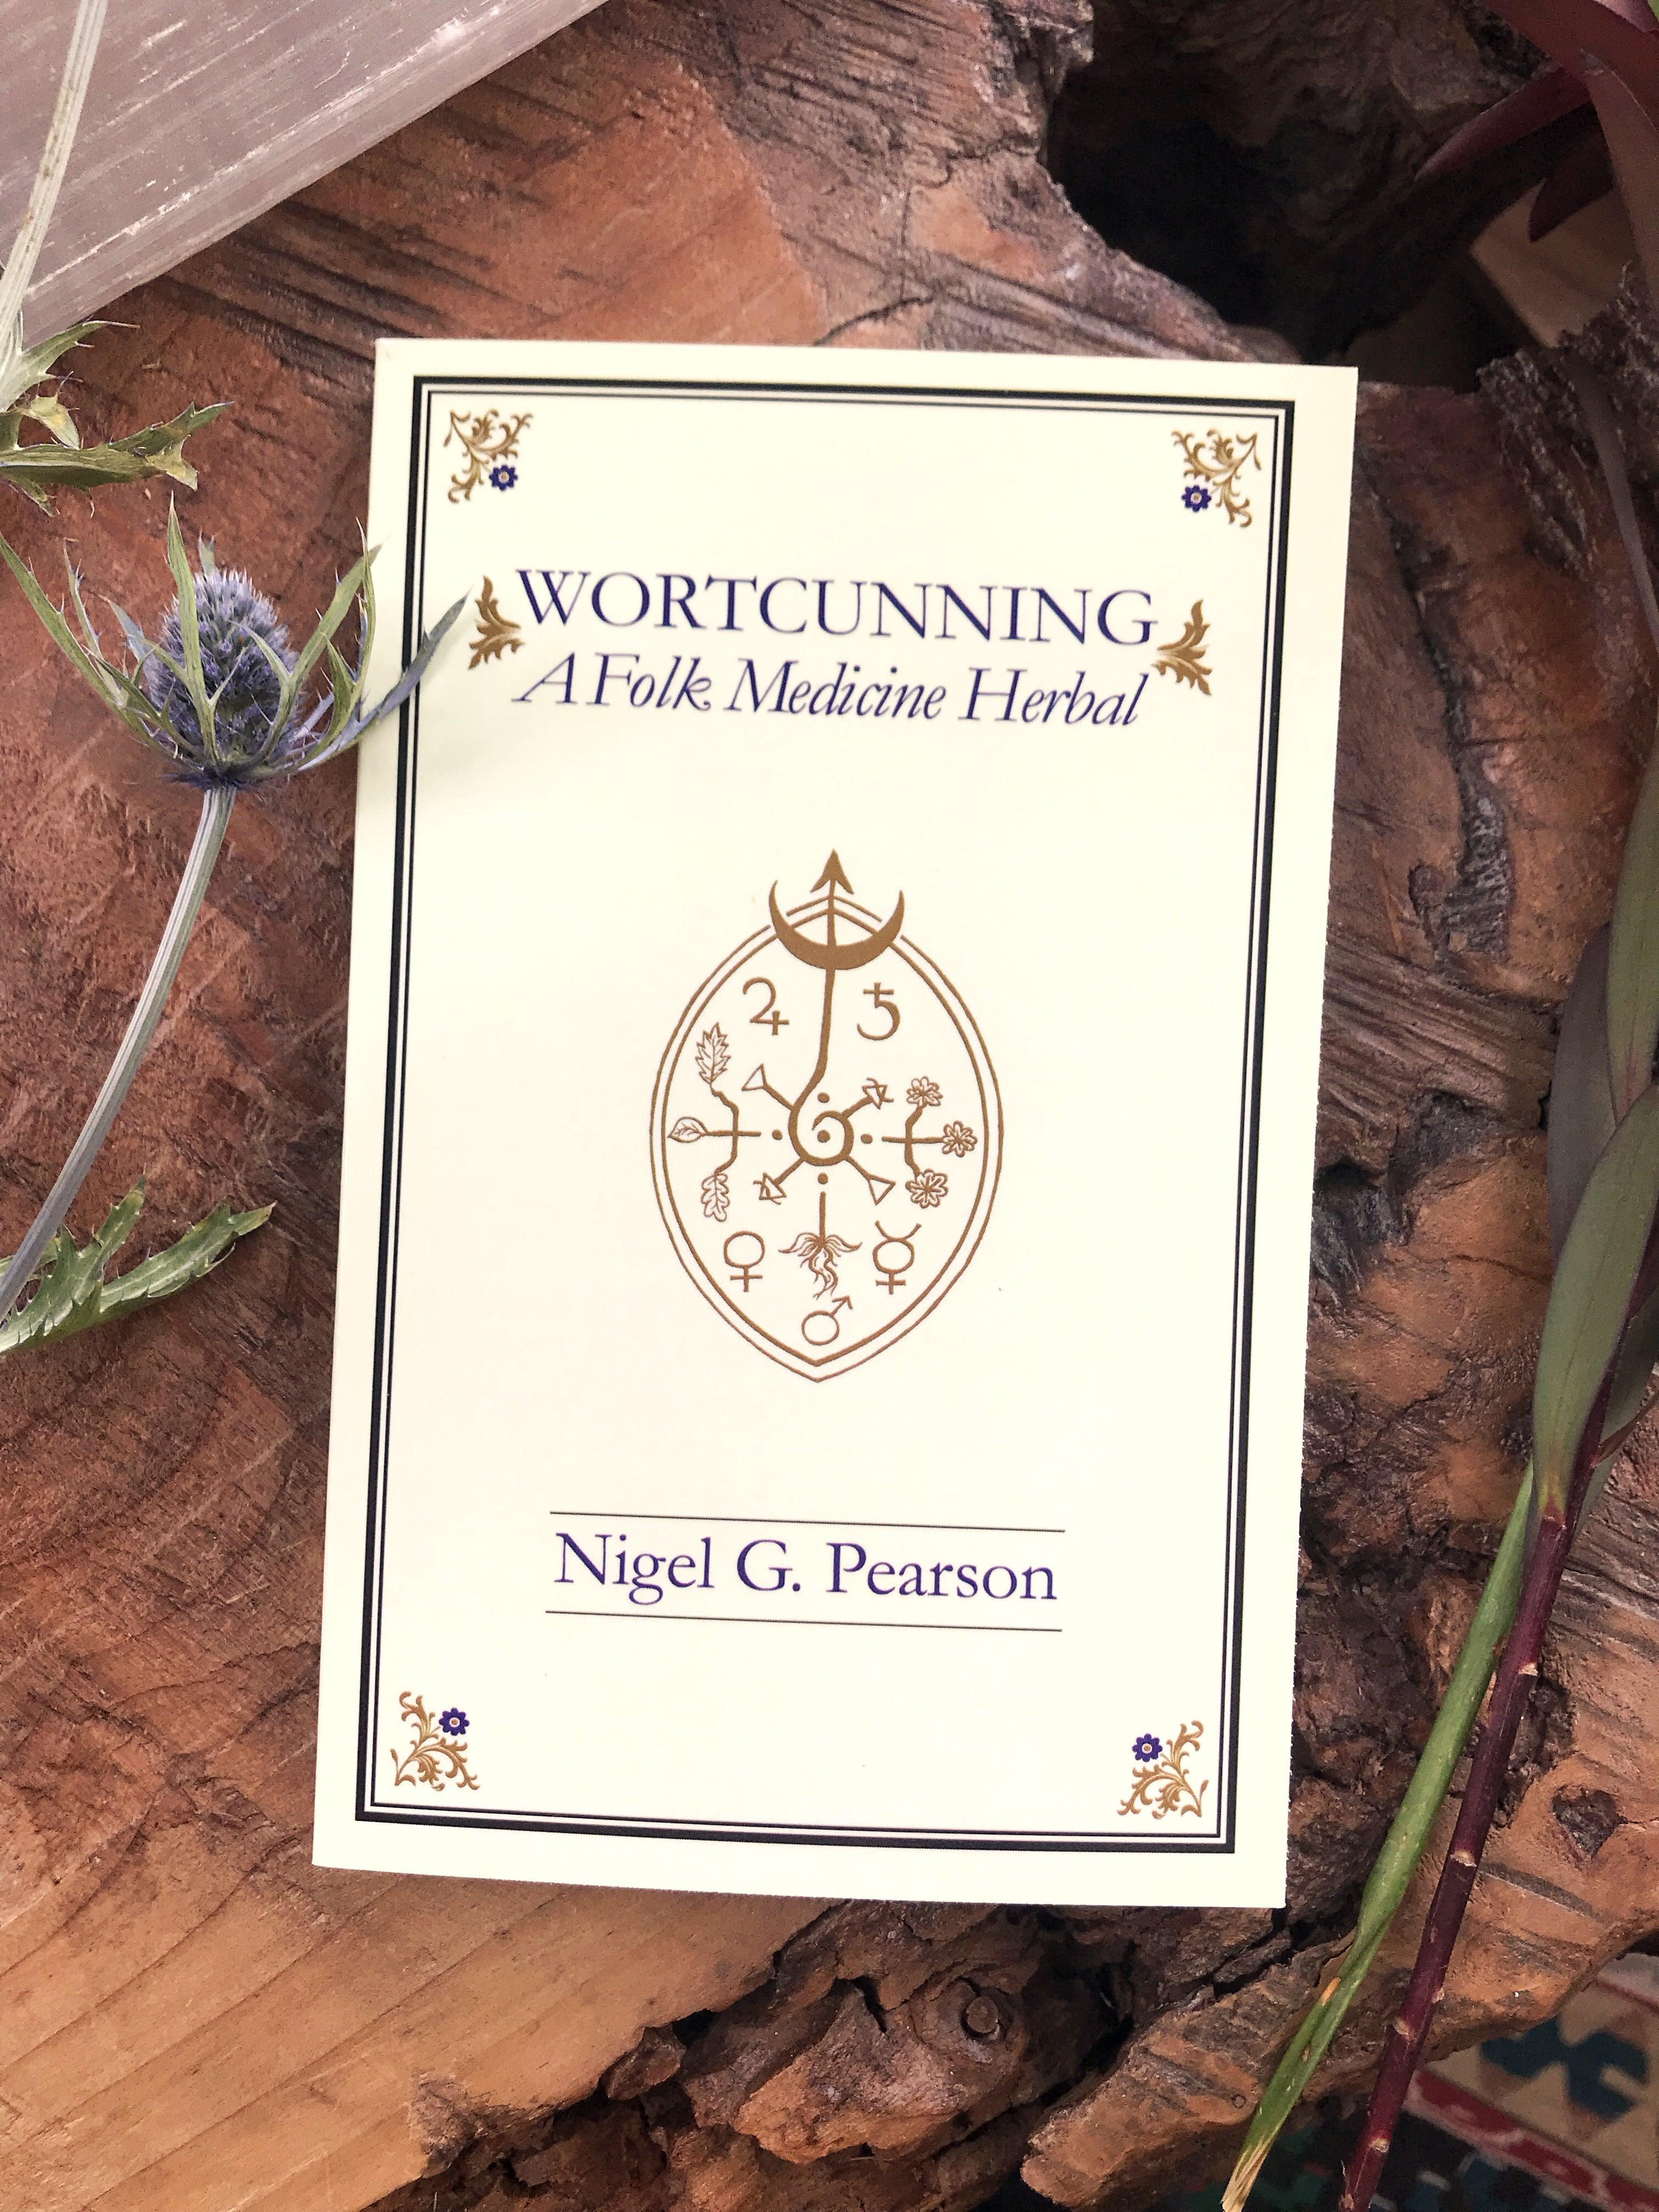 Wortcunning: A folk Medicine and Herbal - Keven Craft Rituals